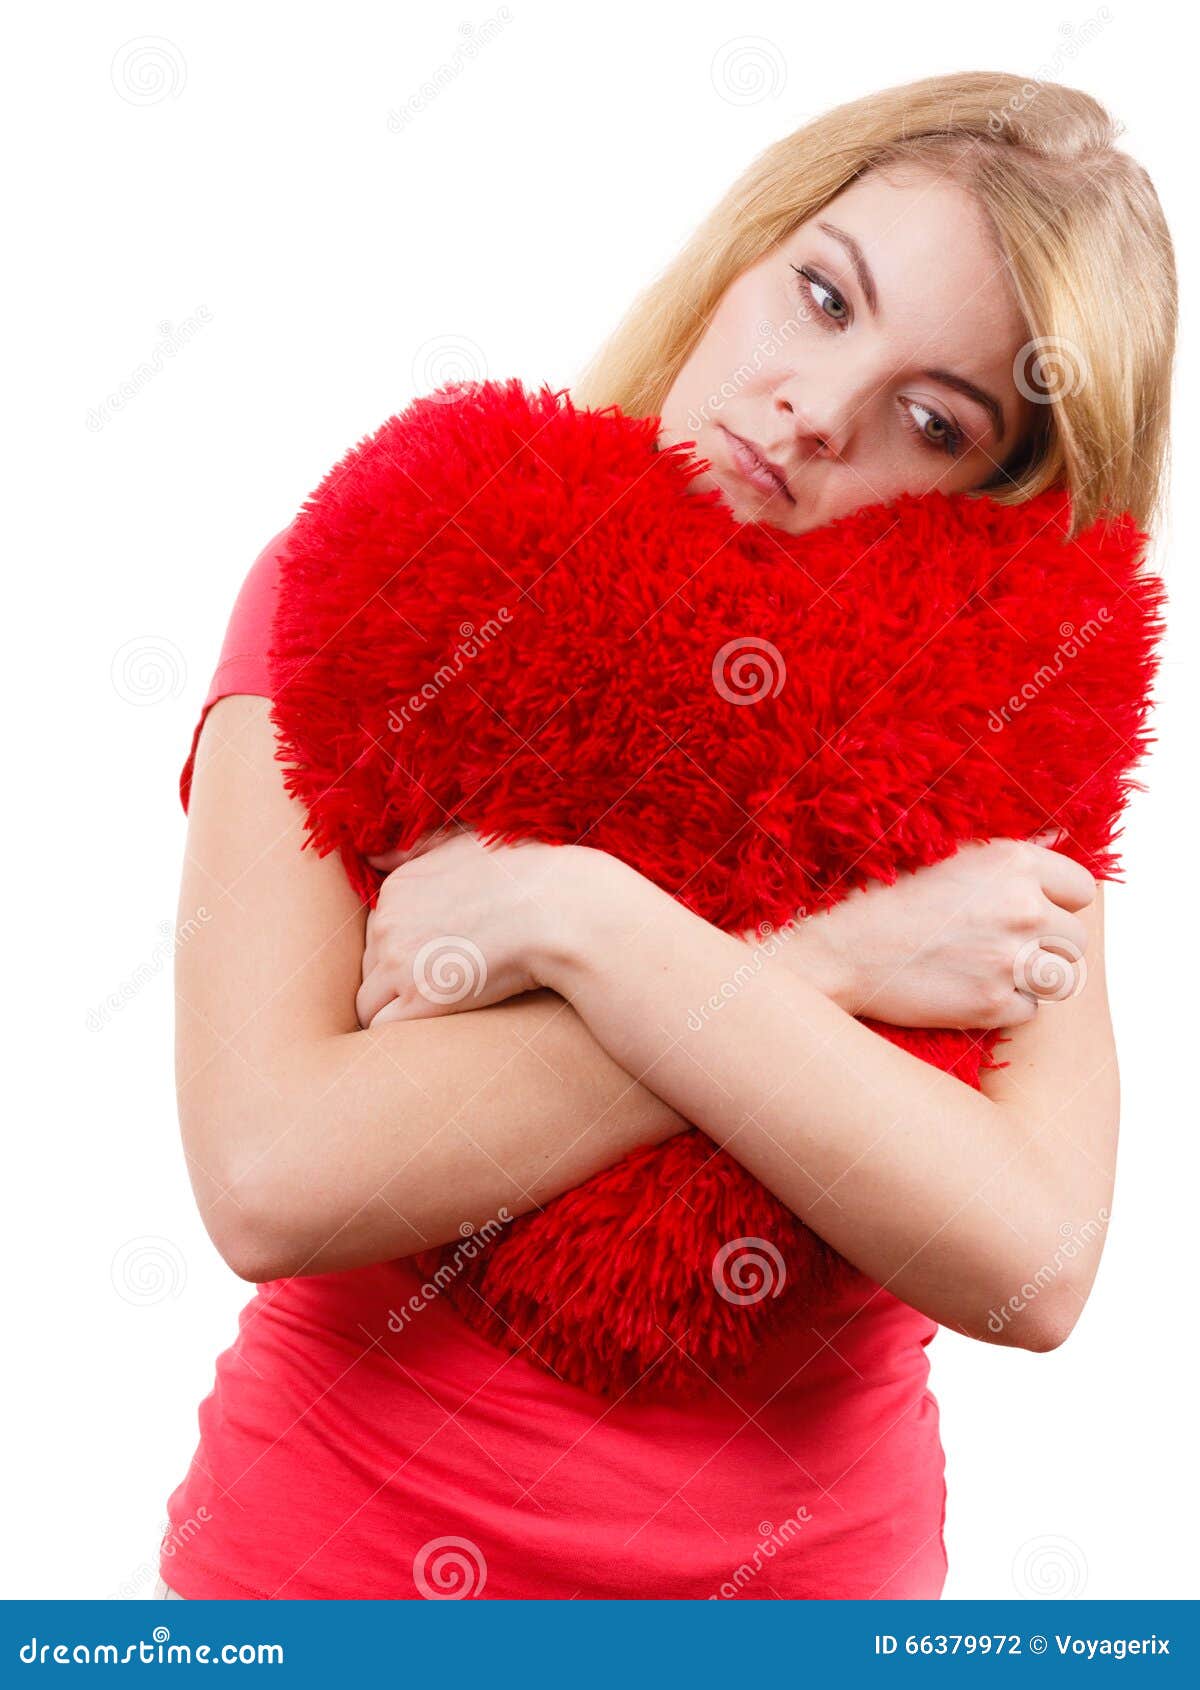 Woman Sad Girl Hugging Red Heart Love Symbol Stock Photo - Image ...